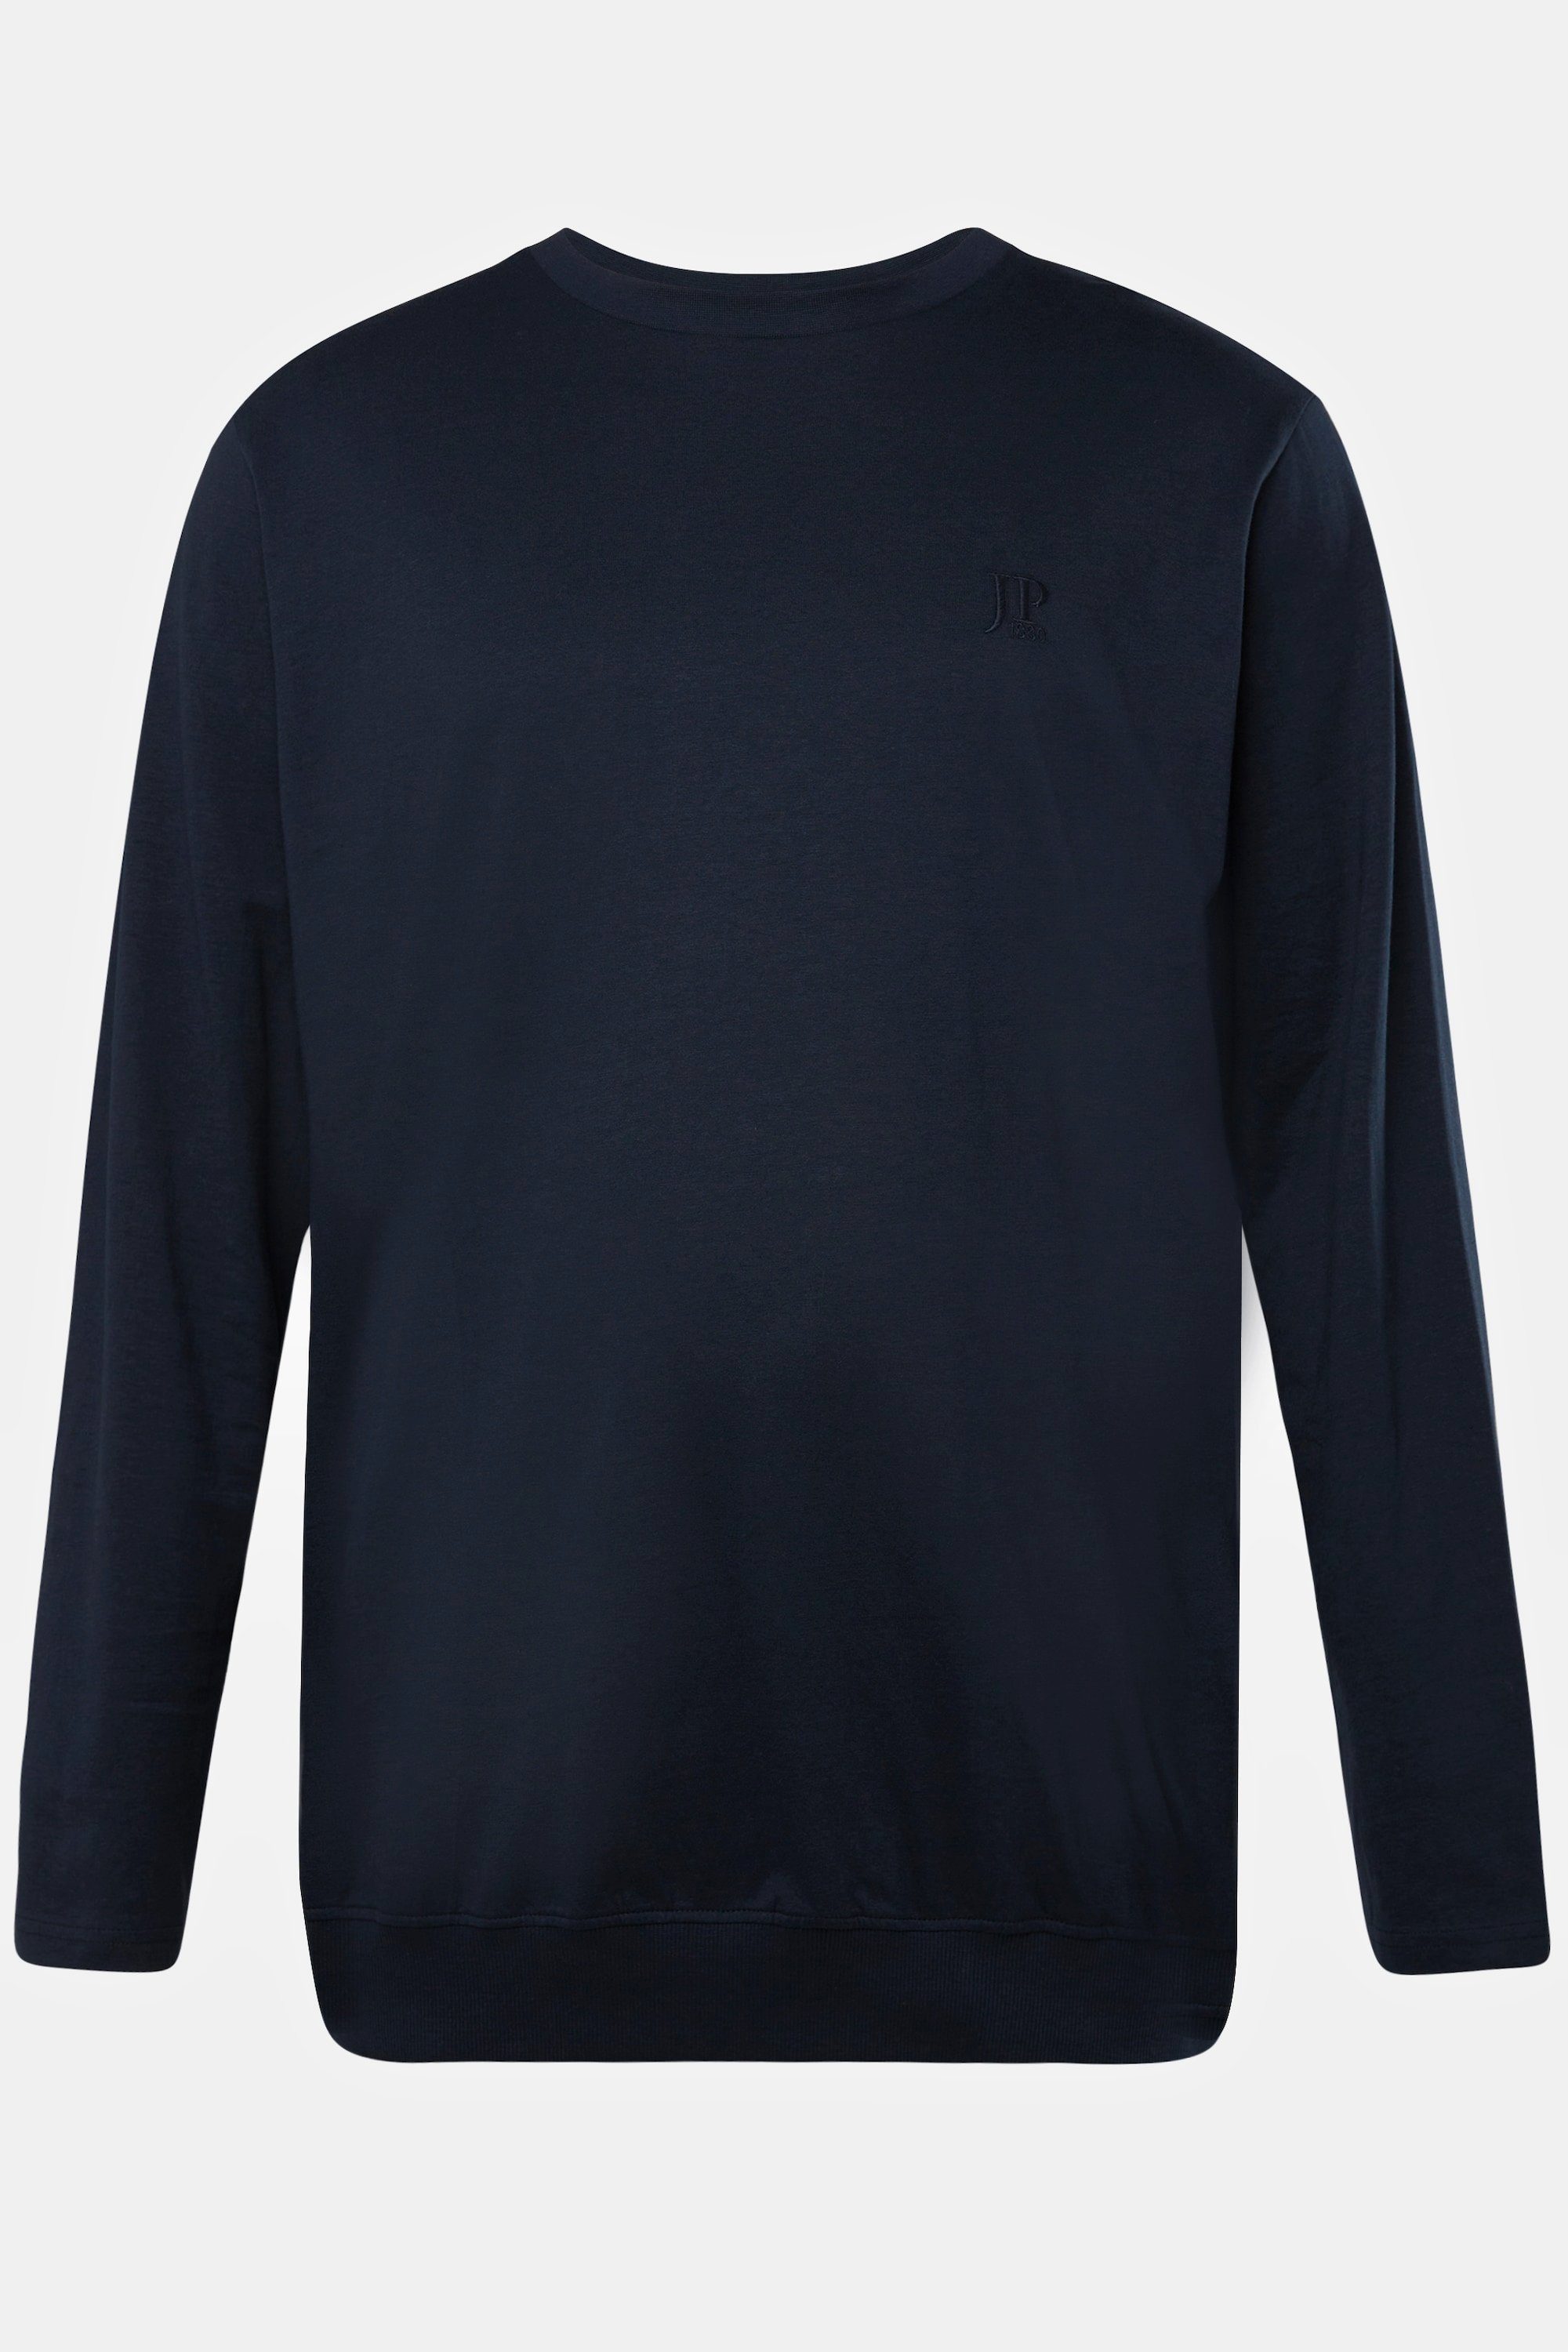 JP1880 T-Shirt 8 navy Langarmshirt bis XL Basic Rundhals blau Bauchfit